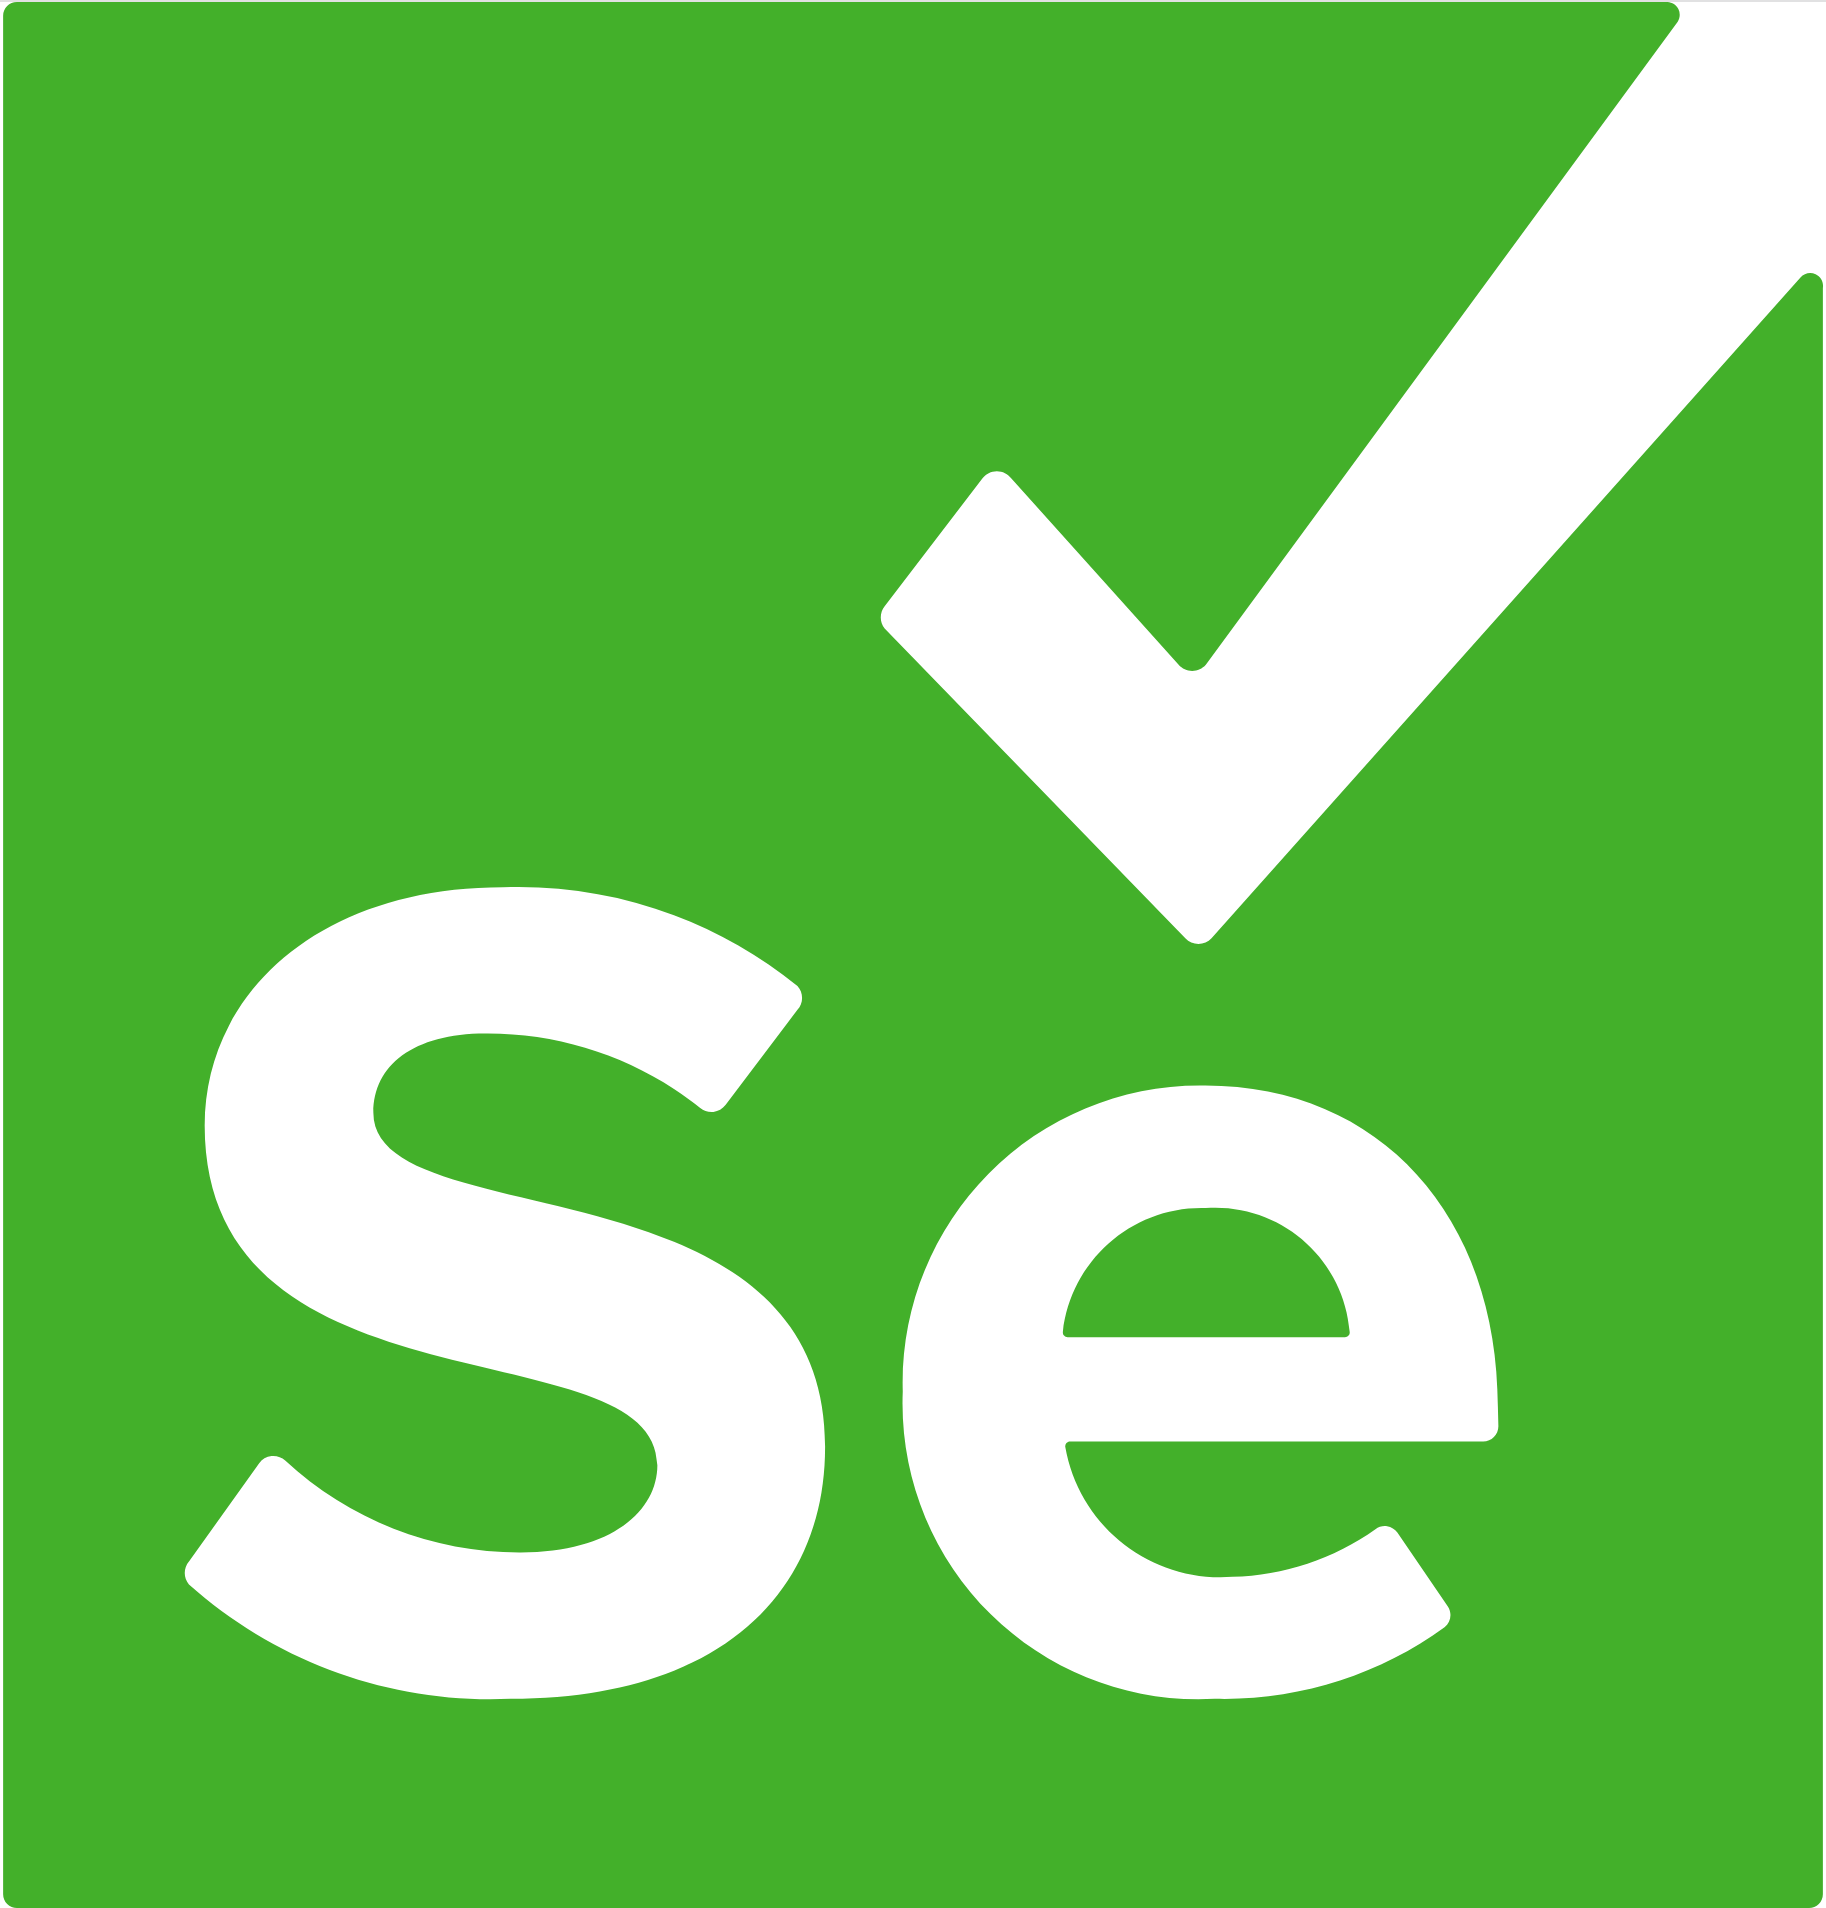 Selenium tech link icon